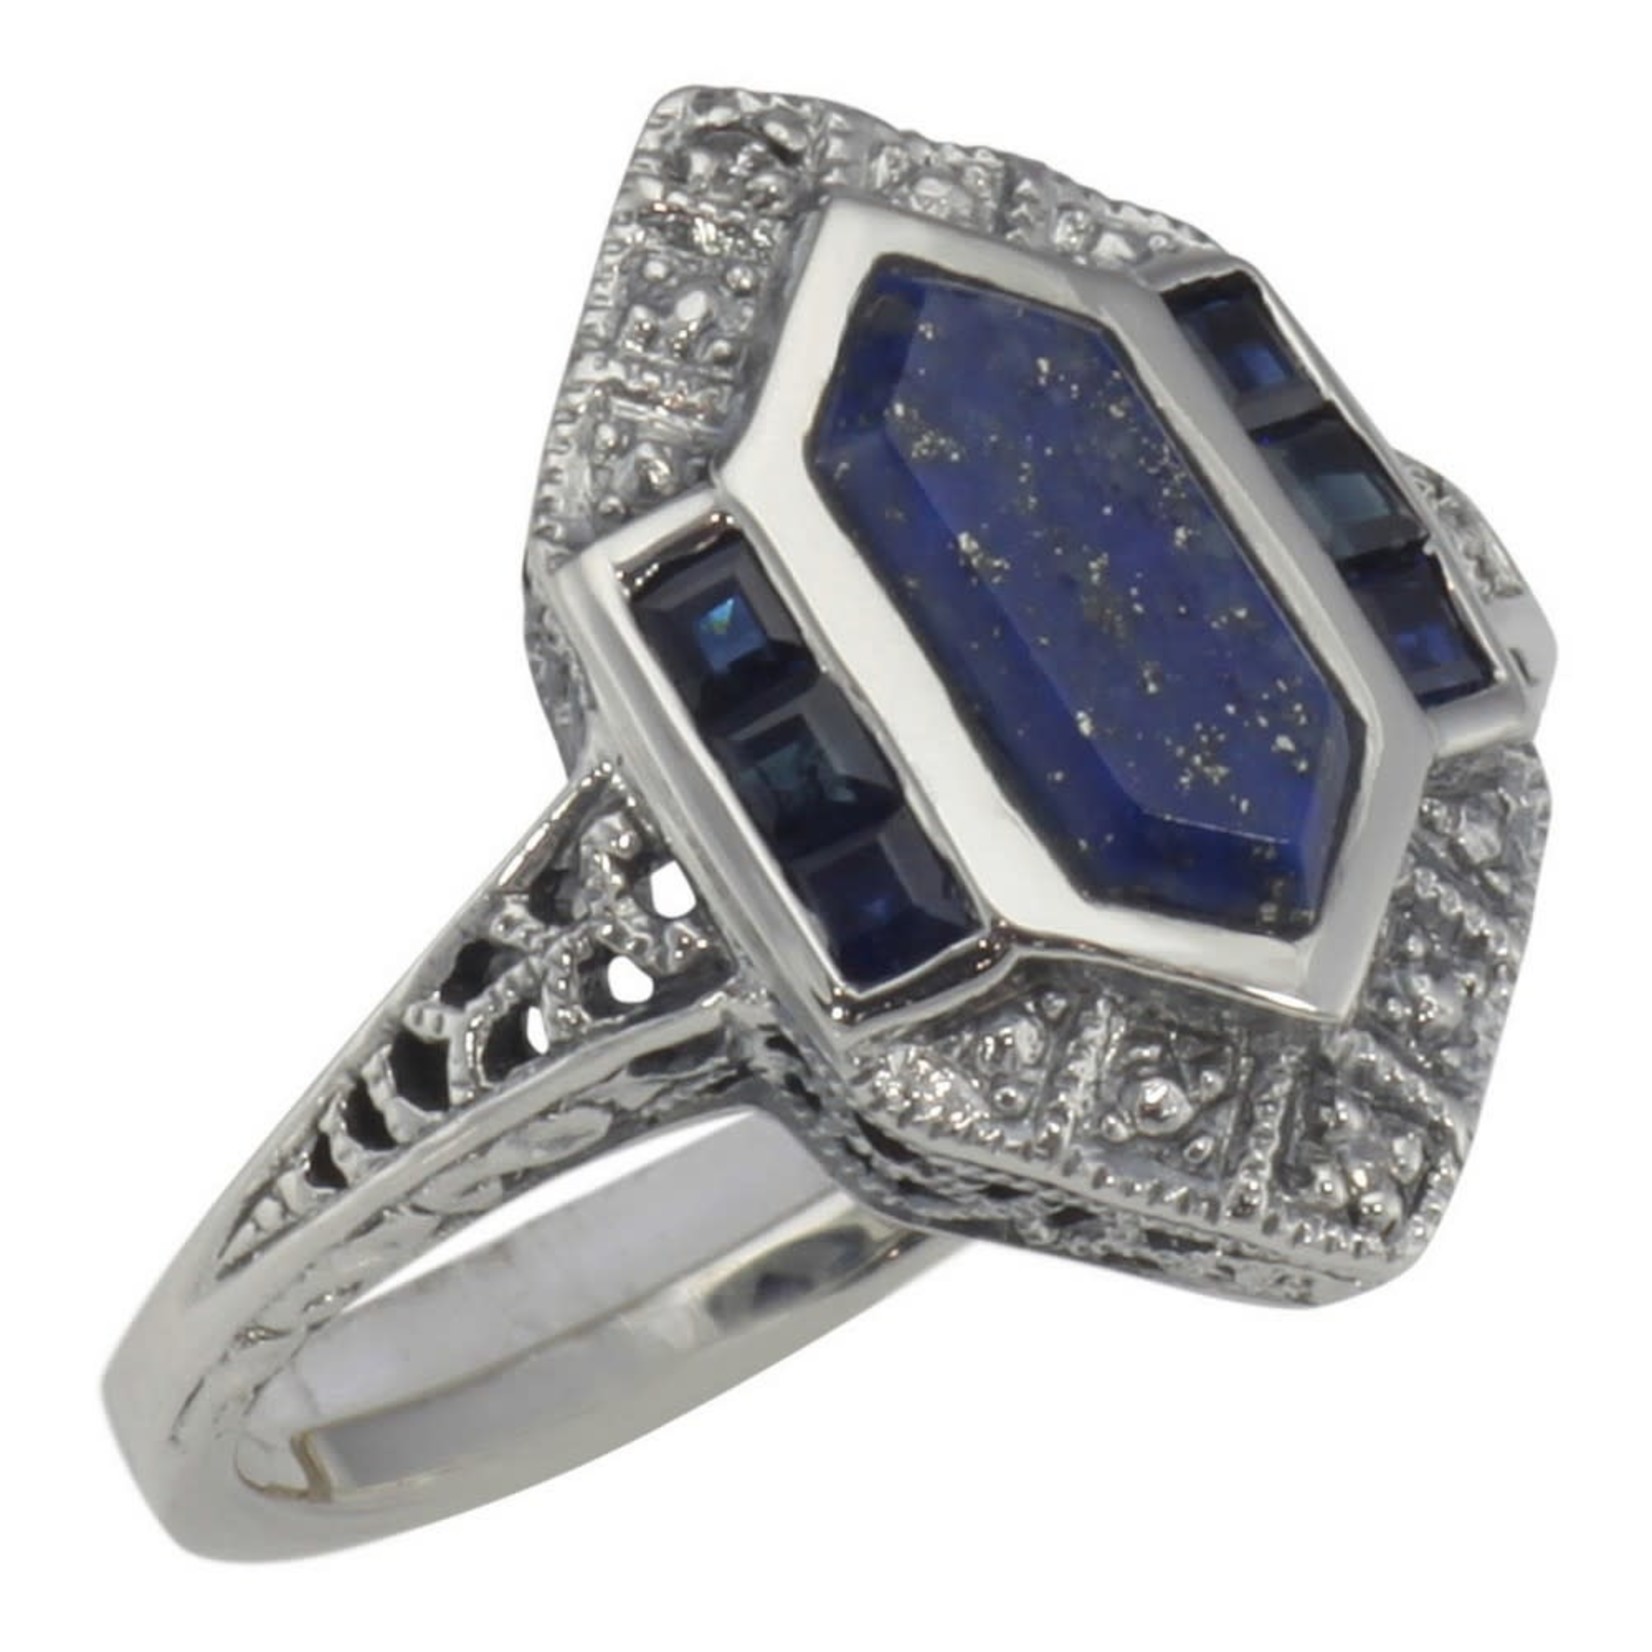 Trufili Art Deco Lapis Sapphire and Diamond Ring